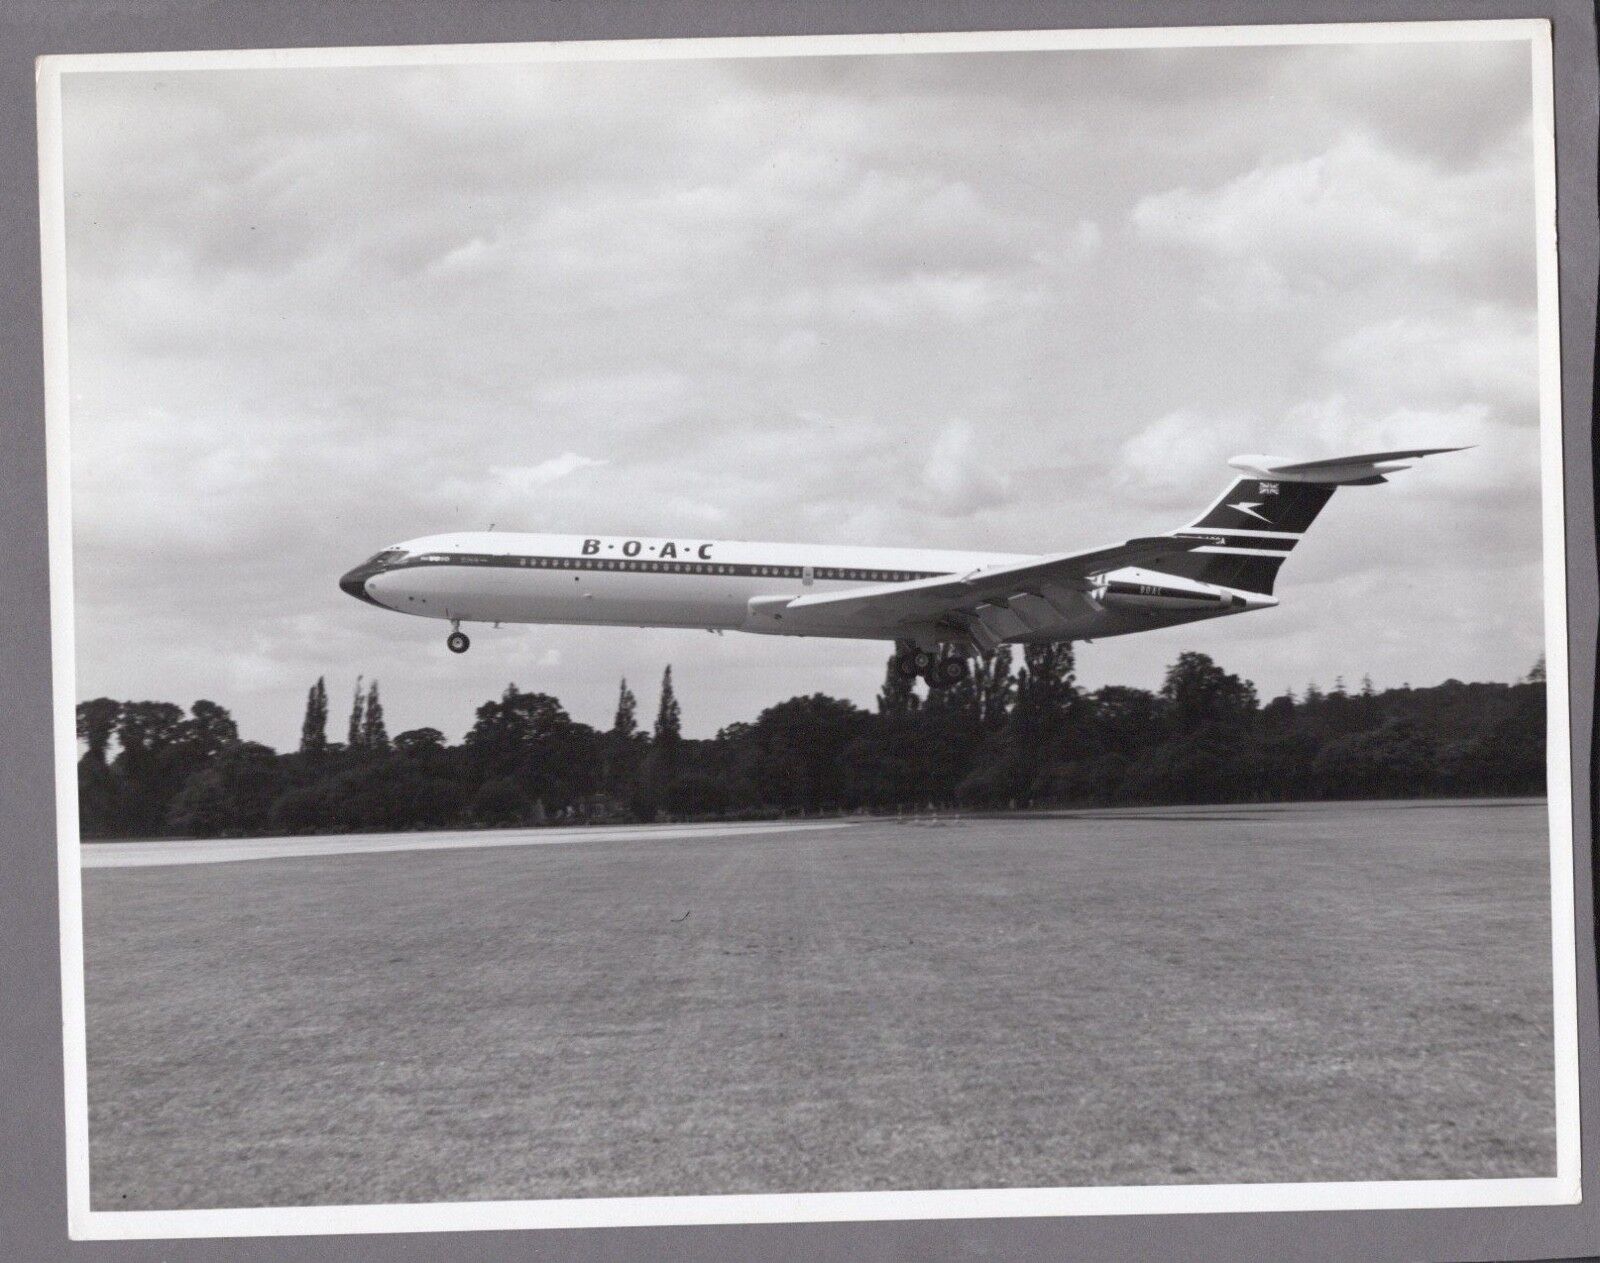 BOAC VICKERS SUPER VC10 LARGE ORIGINAL VINTAGE AIRLINE PHOTO 3